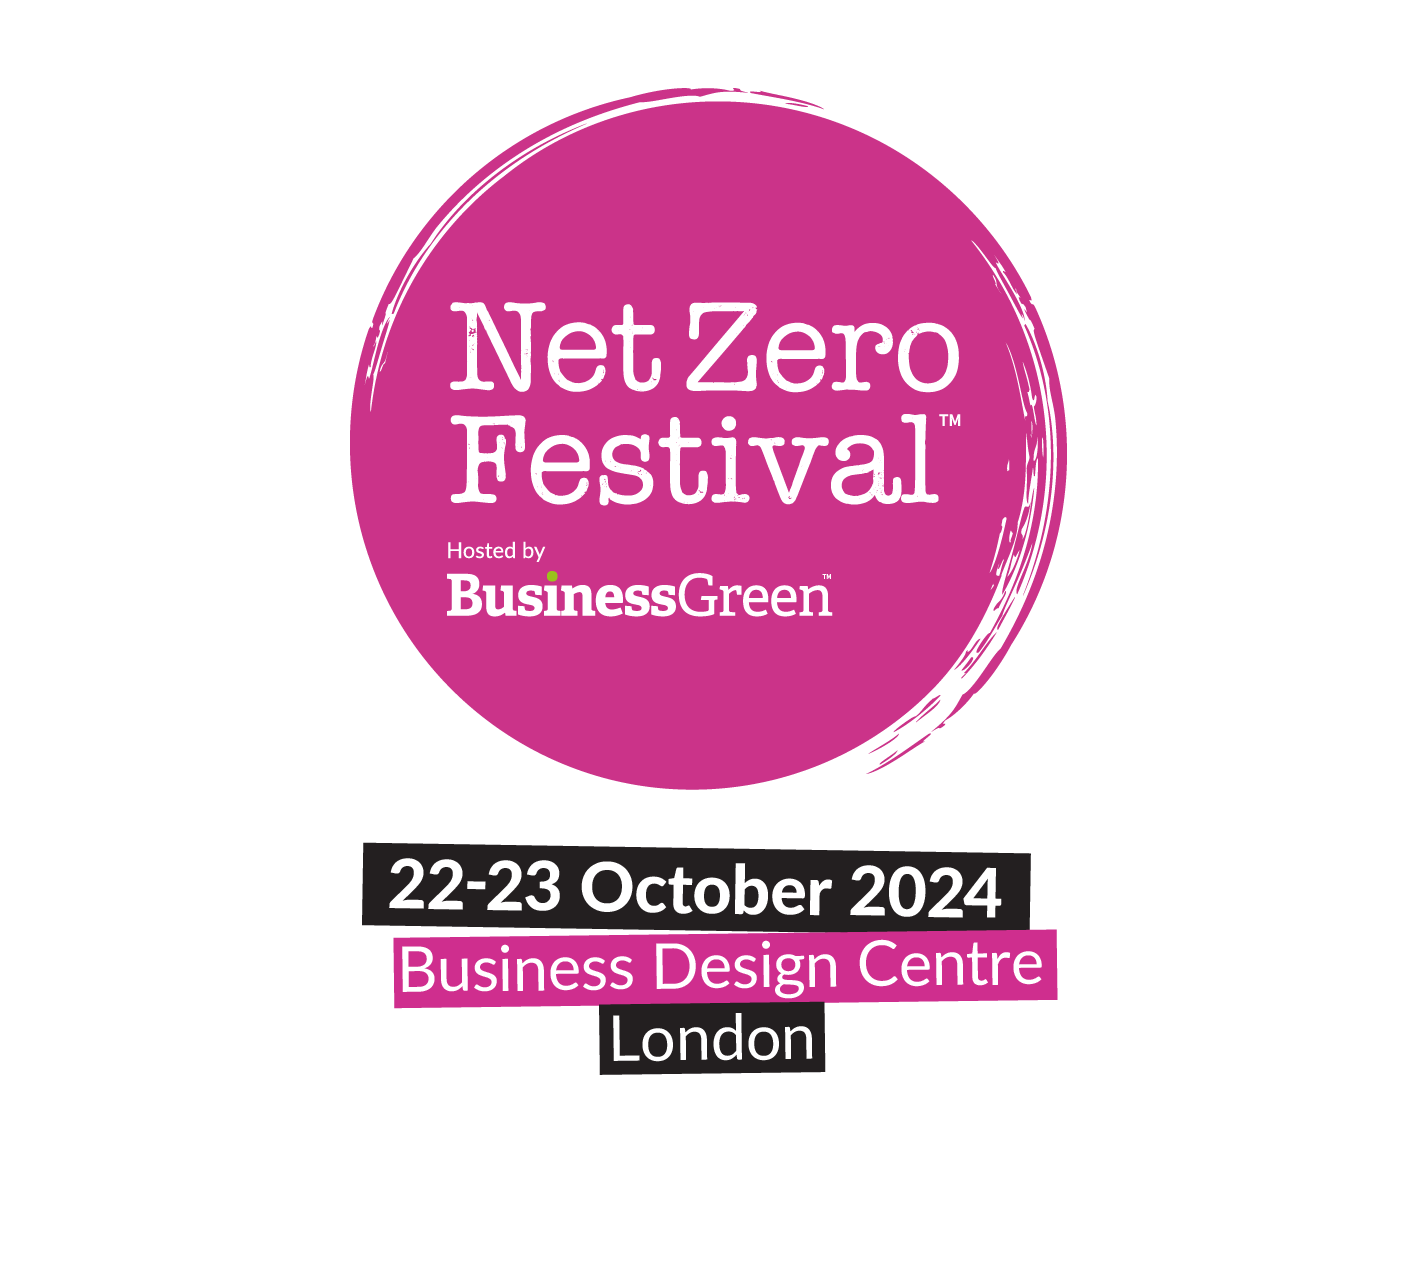 Net Zero Festival Hosted by BusinessGreen